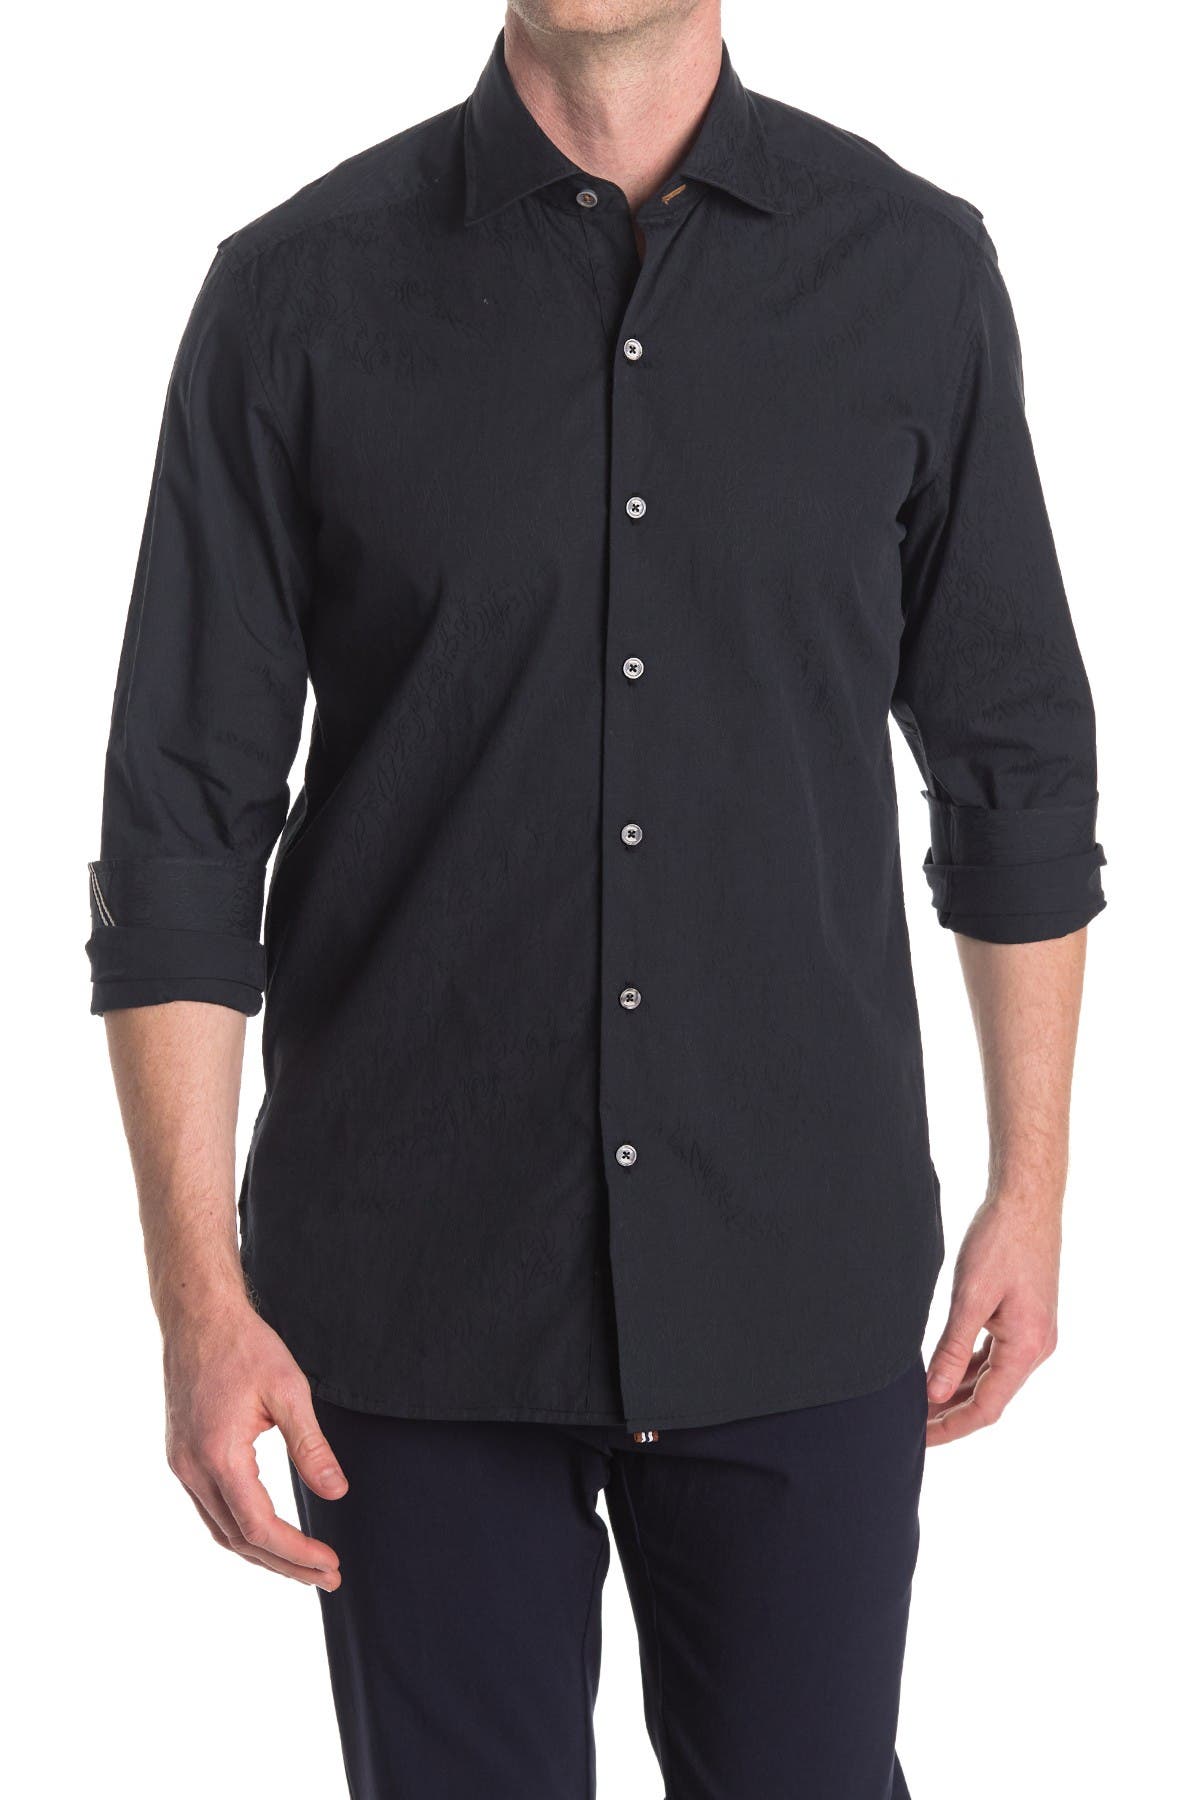 Boconi Jacquard Check Print Long Sleeve Tailored Fit Shirt In Black